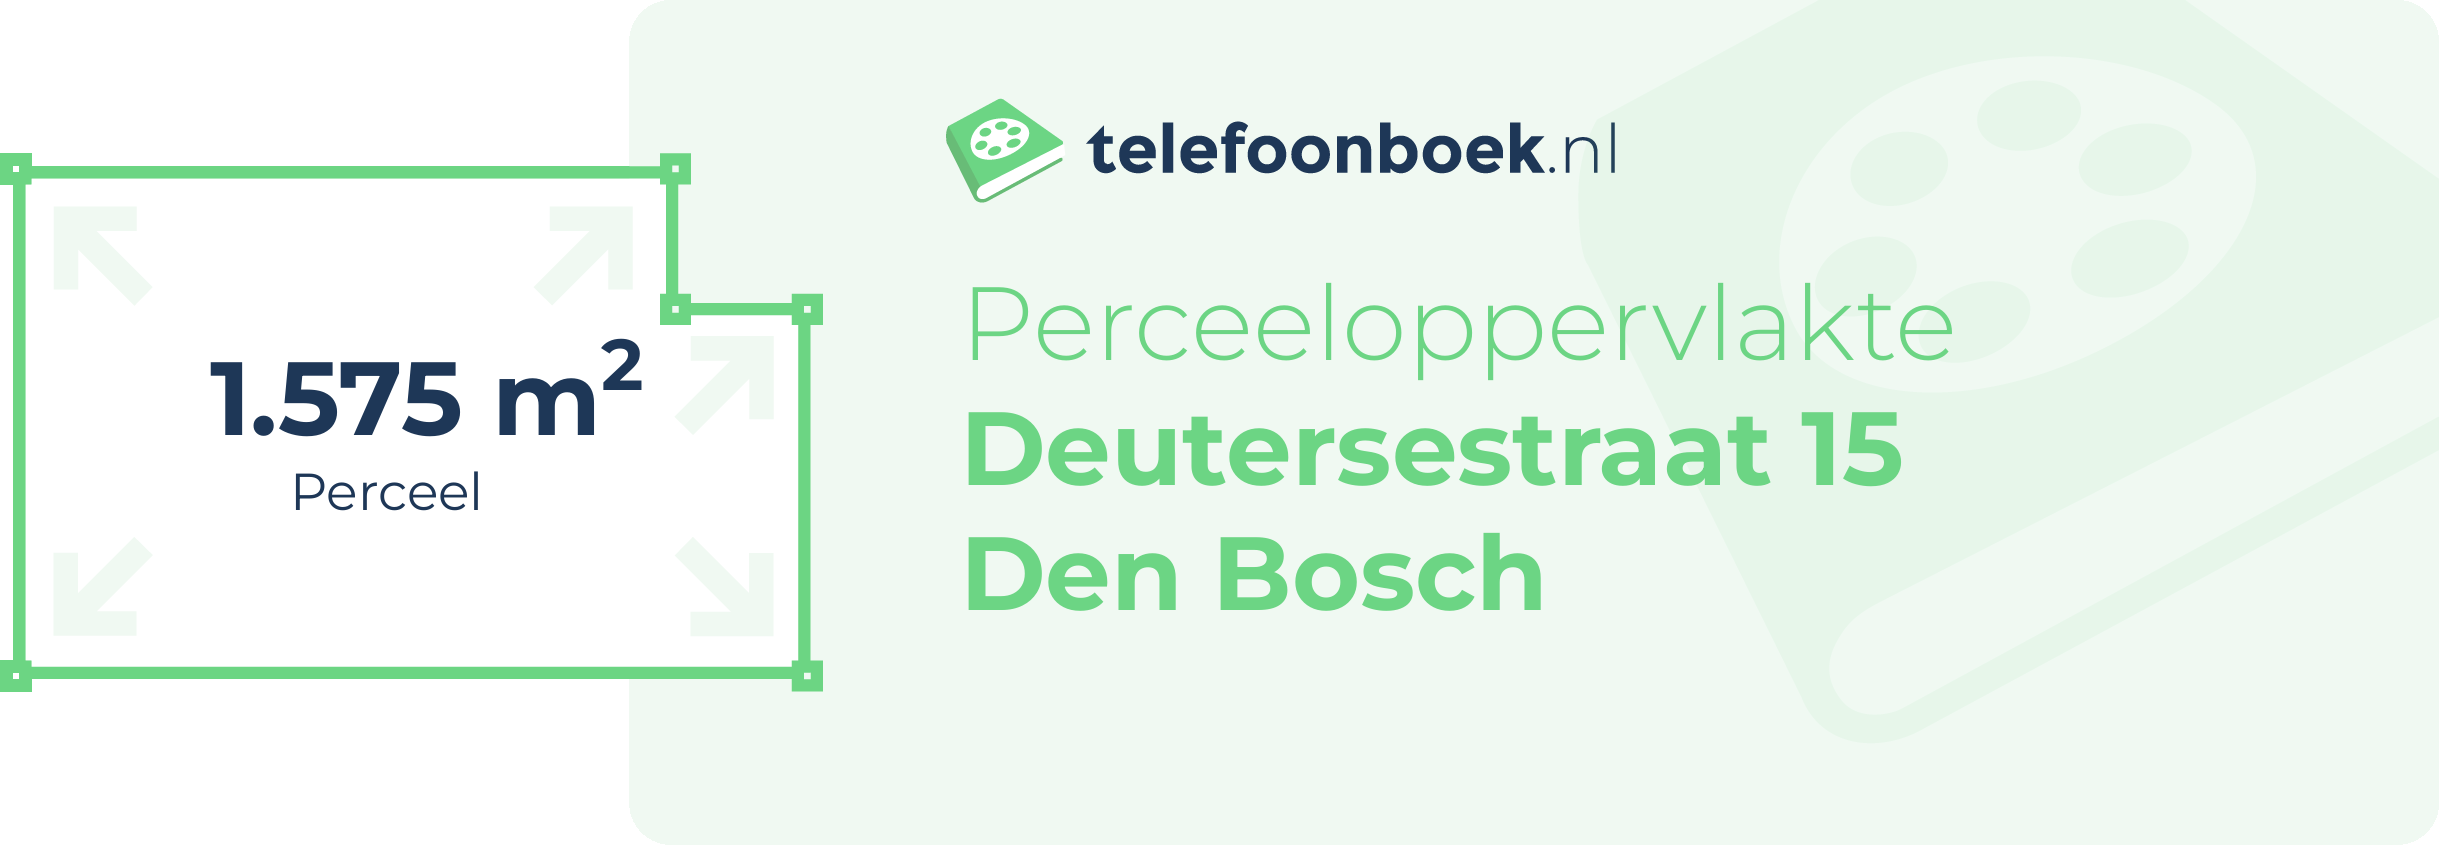 Perceeloppervlakte Deutersestraat 15 Den Bosch